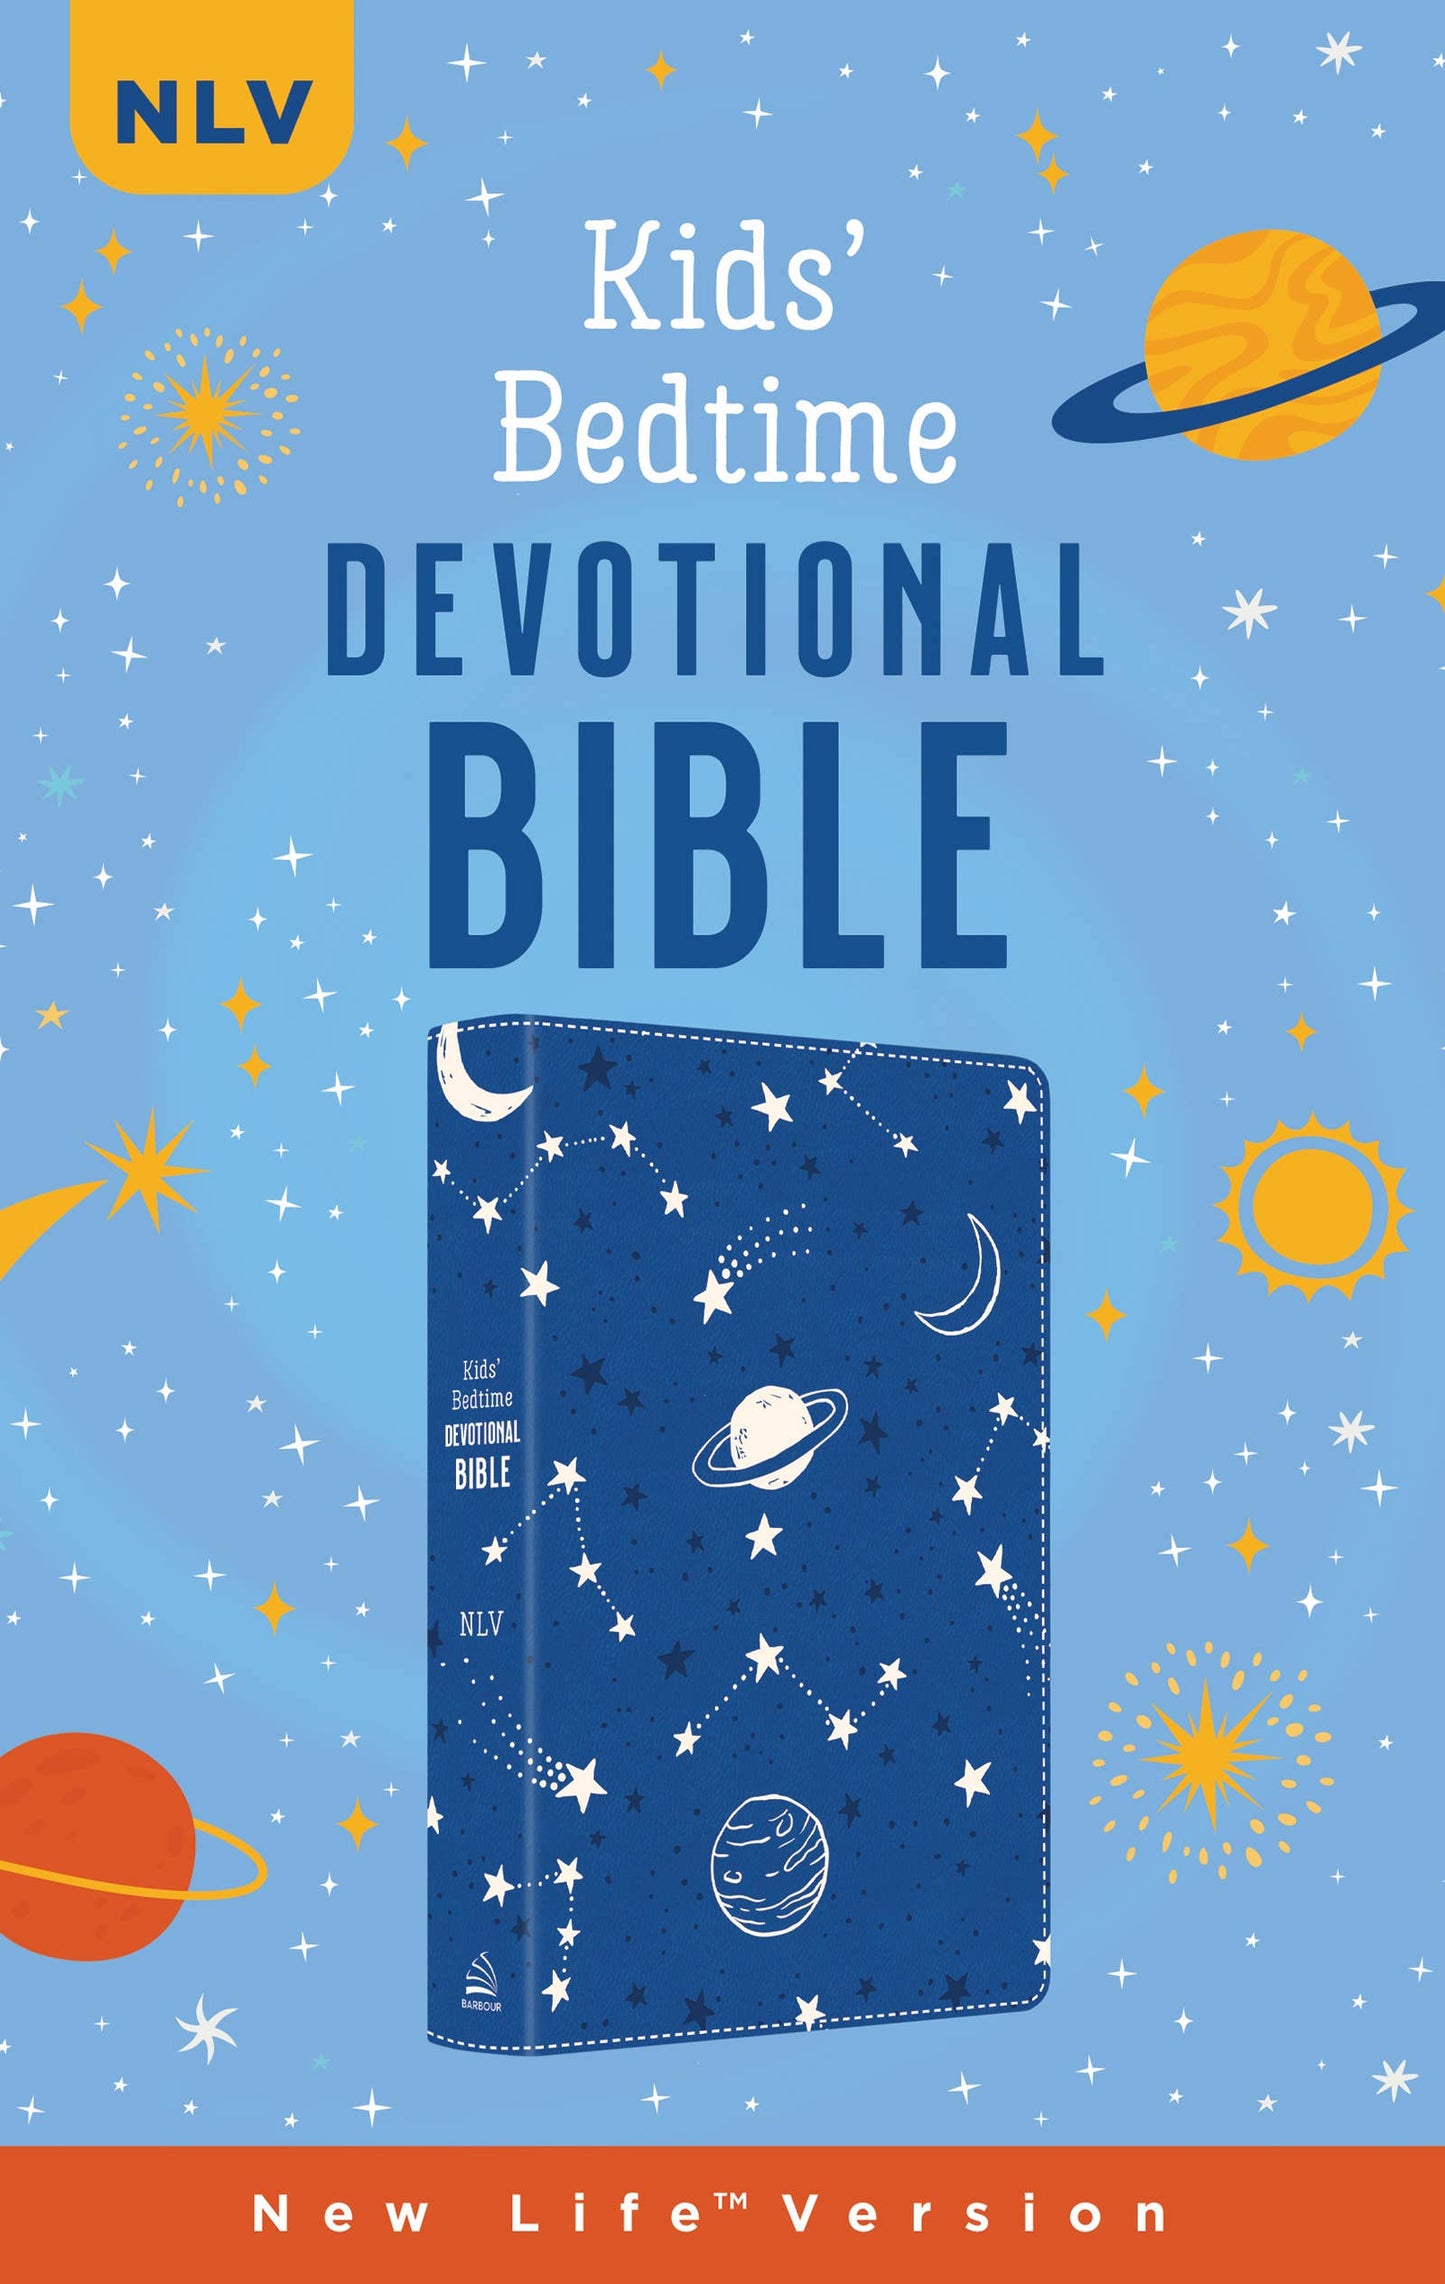 The Kids' Bedtime Devotional Bible: NLV [Cobalt Cosmos]